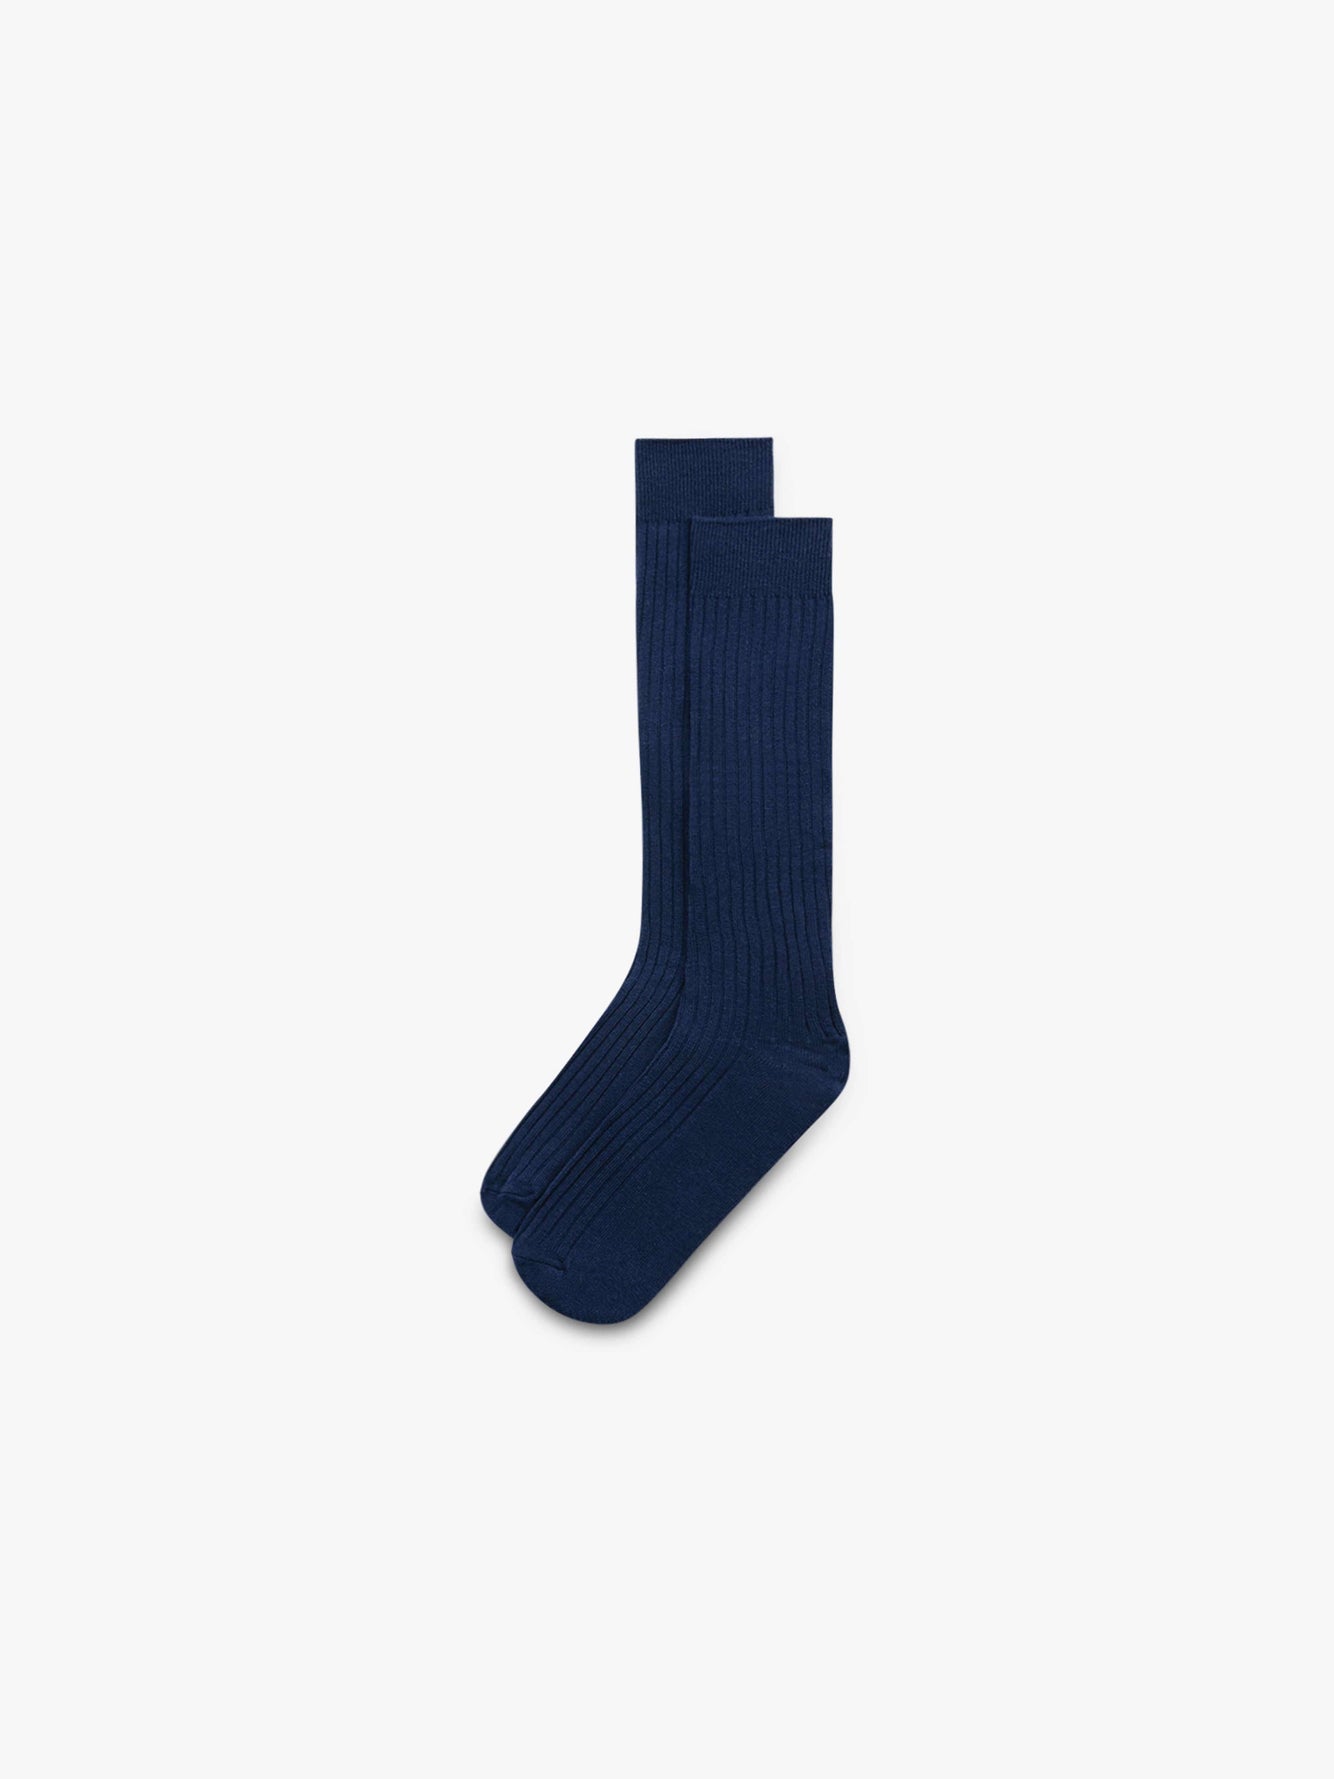 Navy Ribbed Socks (2-pack) - Grand Le Mar